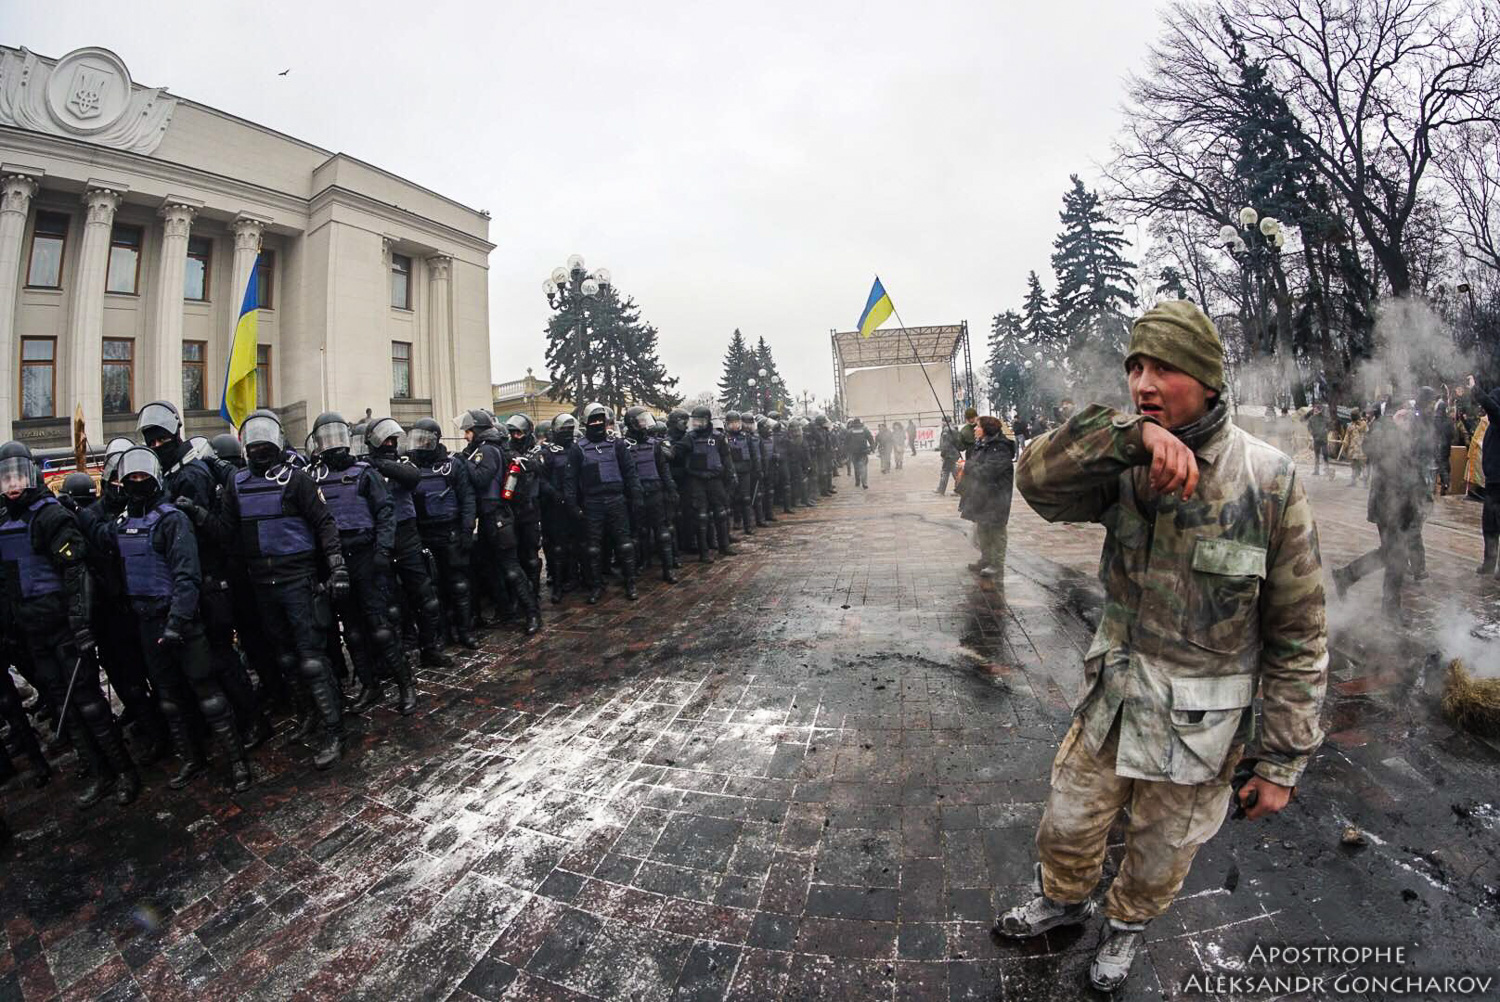 Ukraine News in brief. Tuesday 16 January. [Ukrainian sources] 4e141d7b47159f66fdba6db27beab3cd